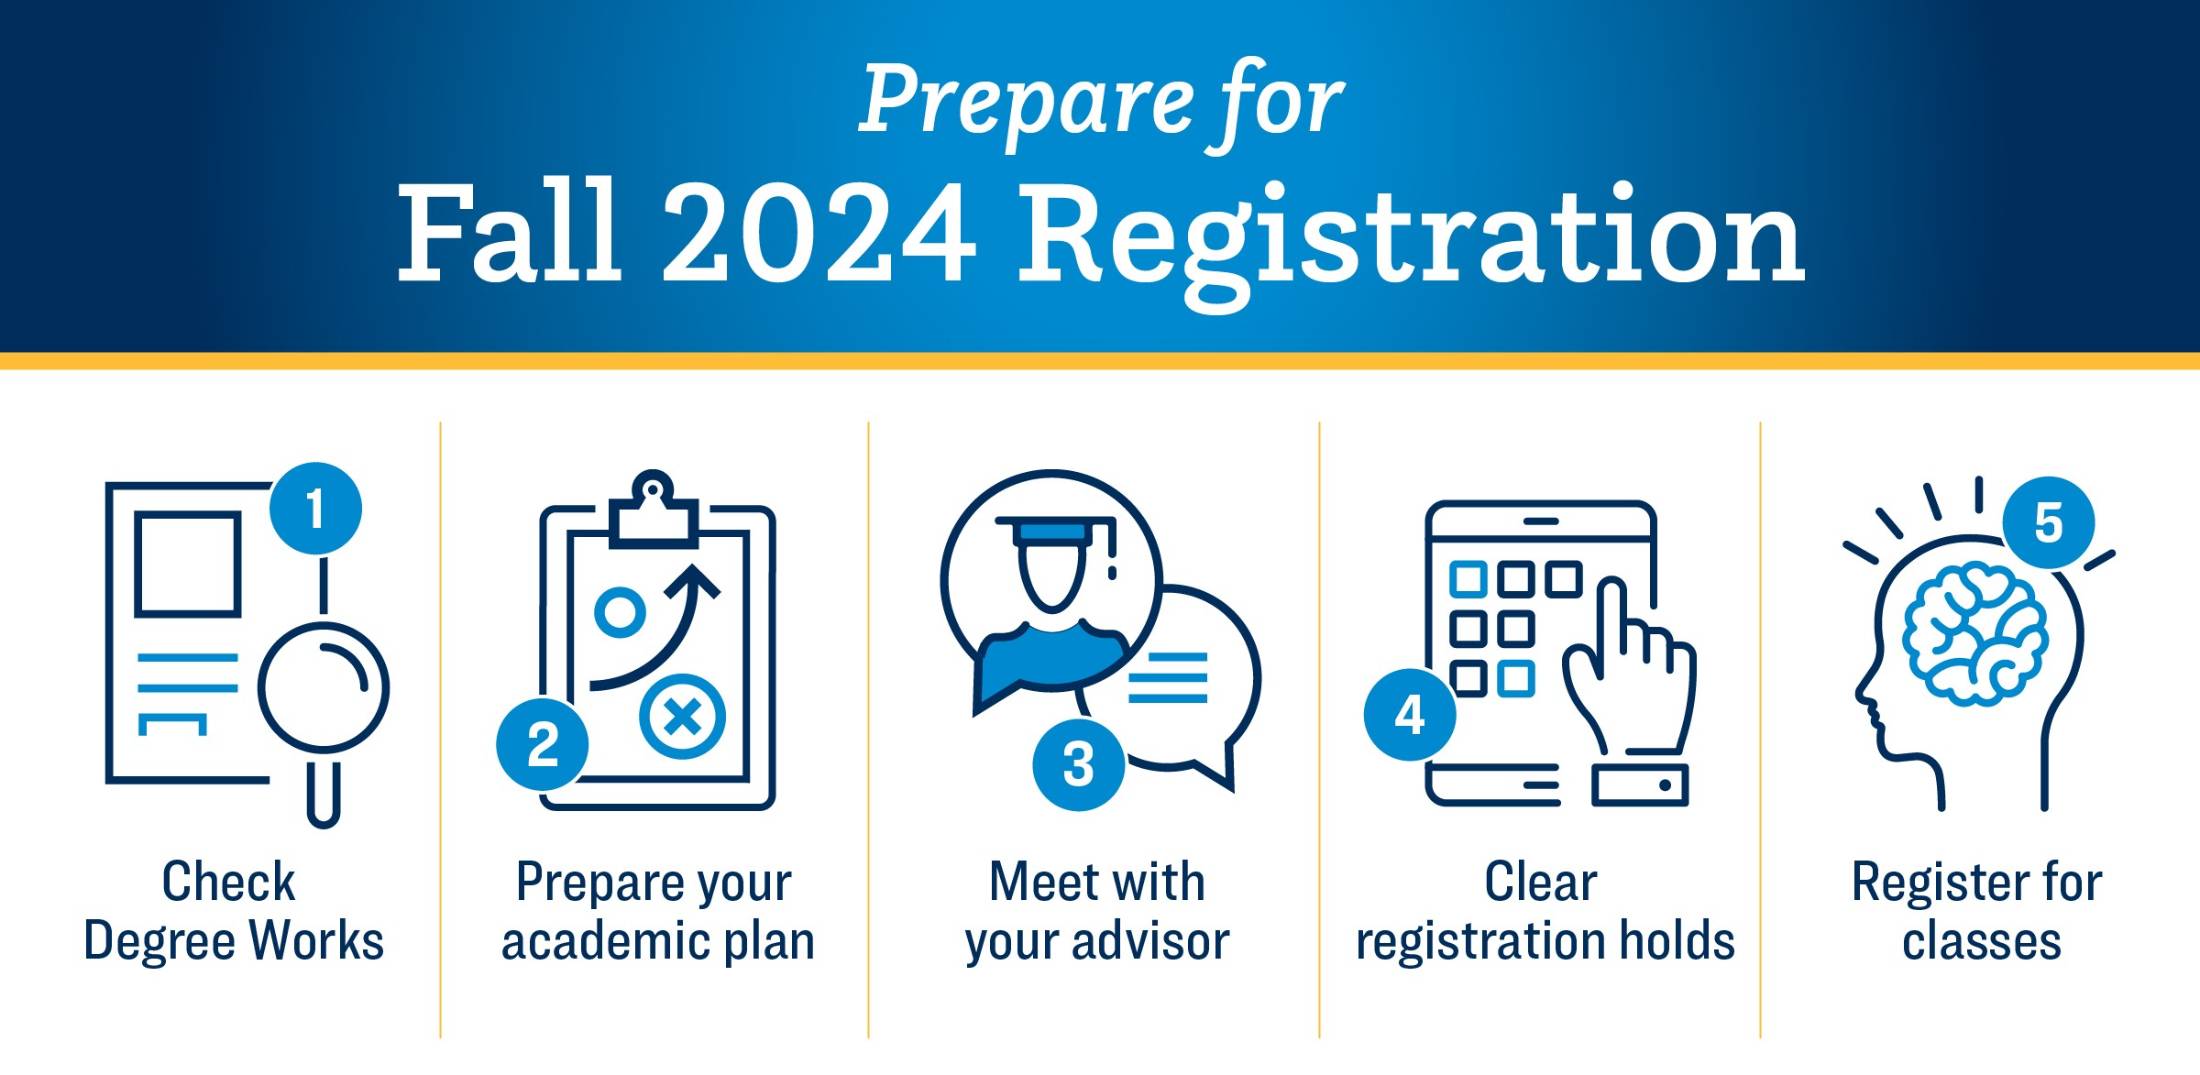 Prepare for Fall 2024 Registration